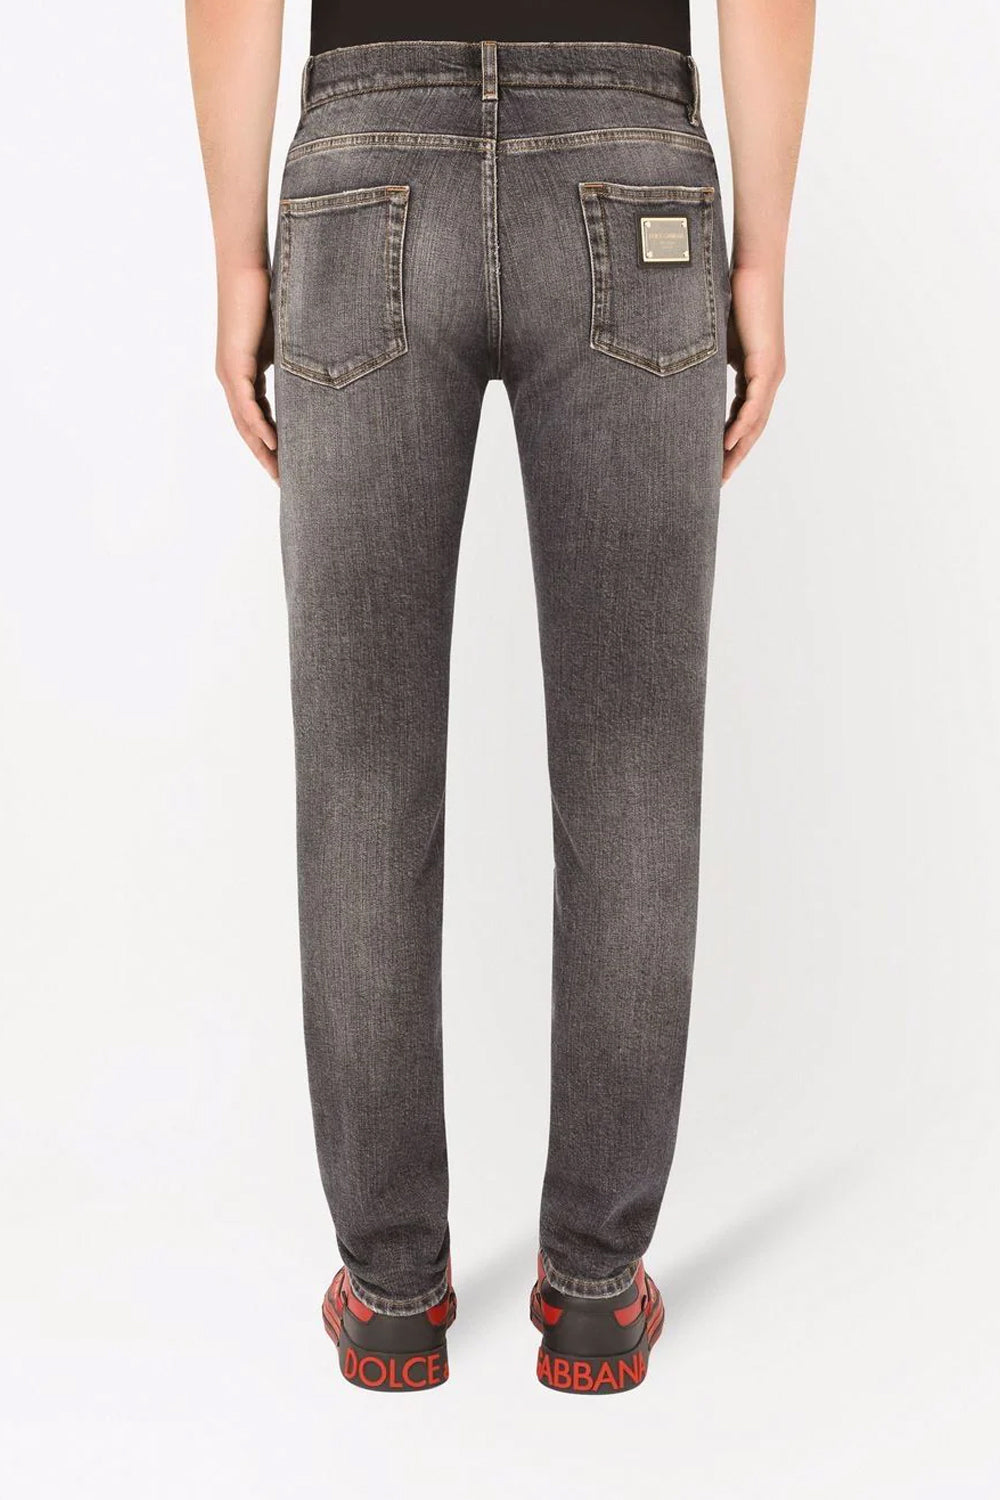 Dolce & Gabbana low-rise slim-cut jeans